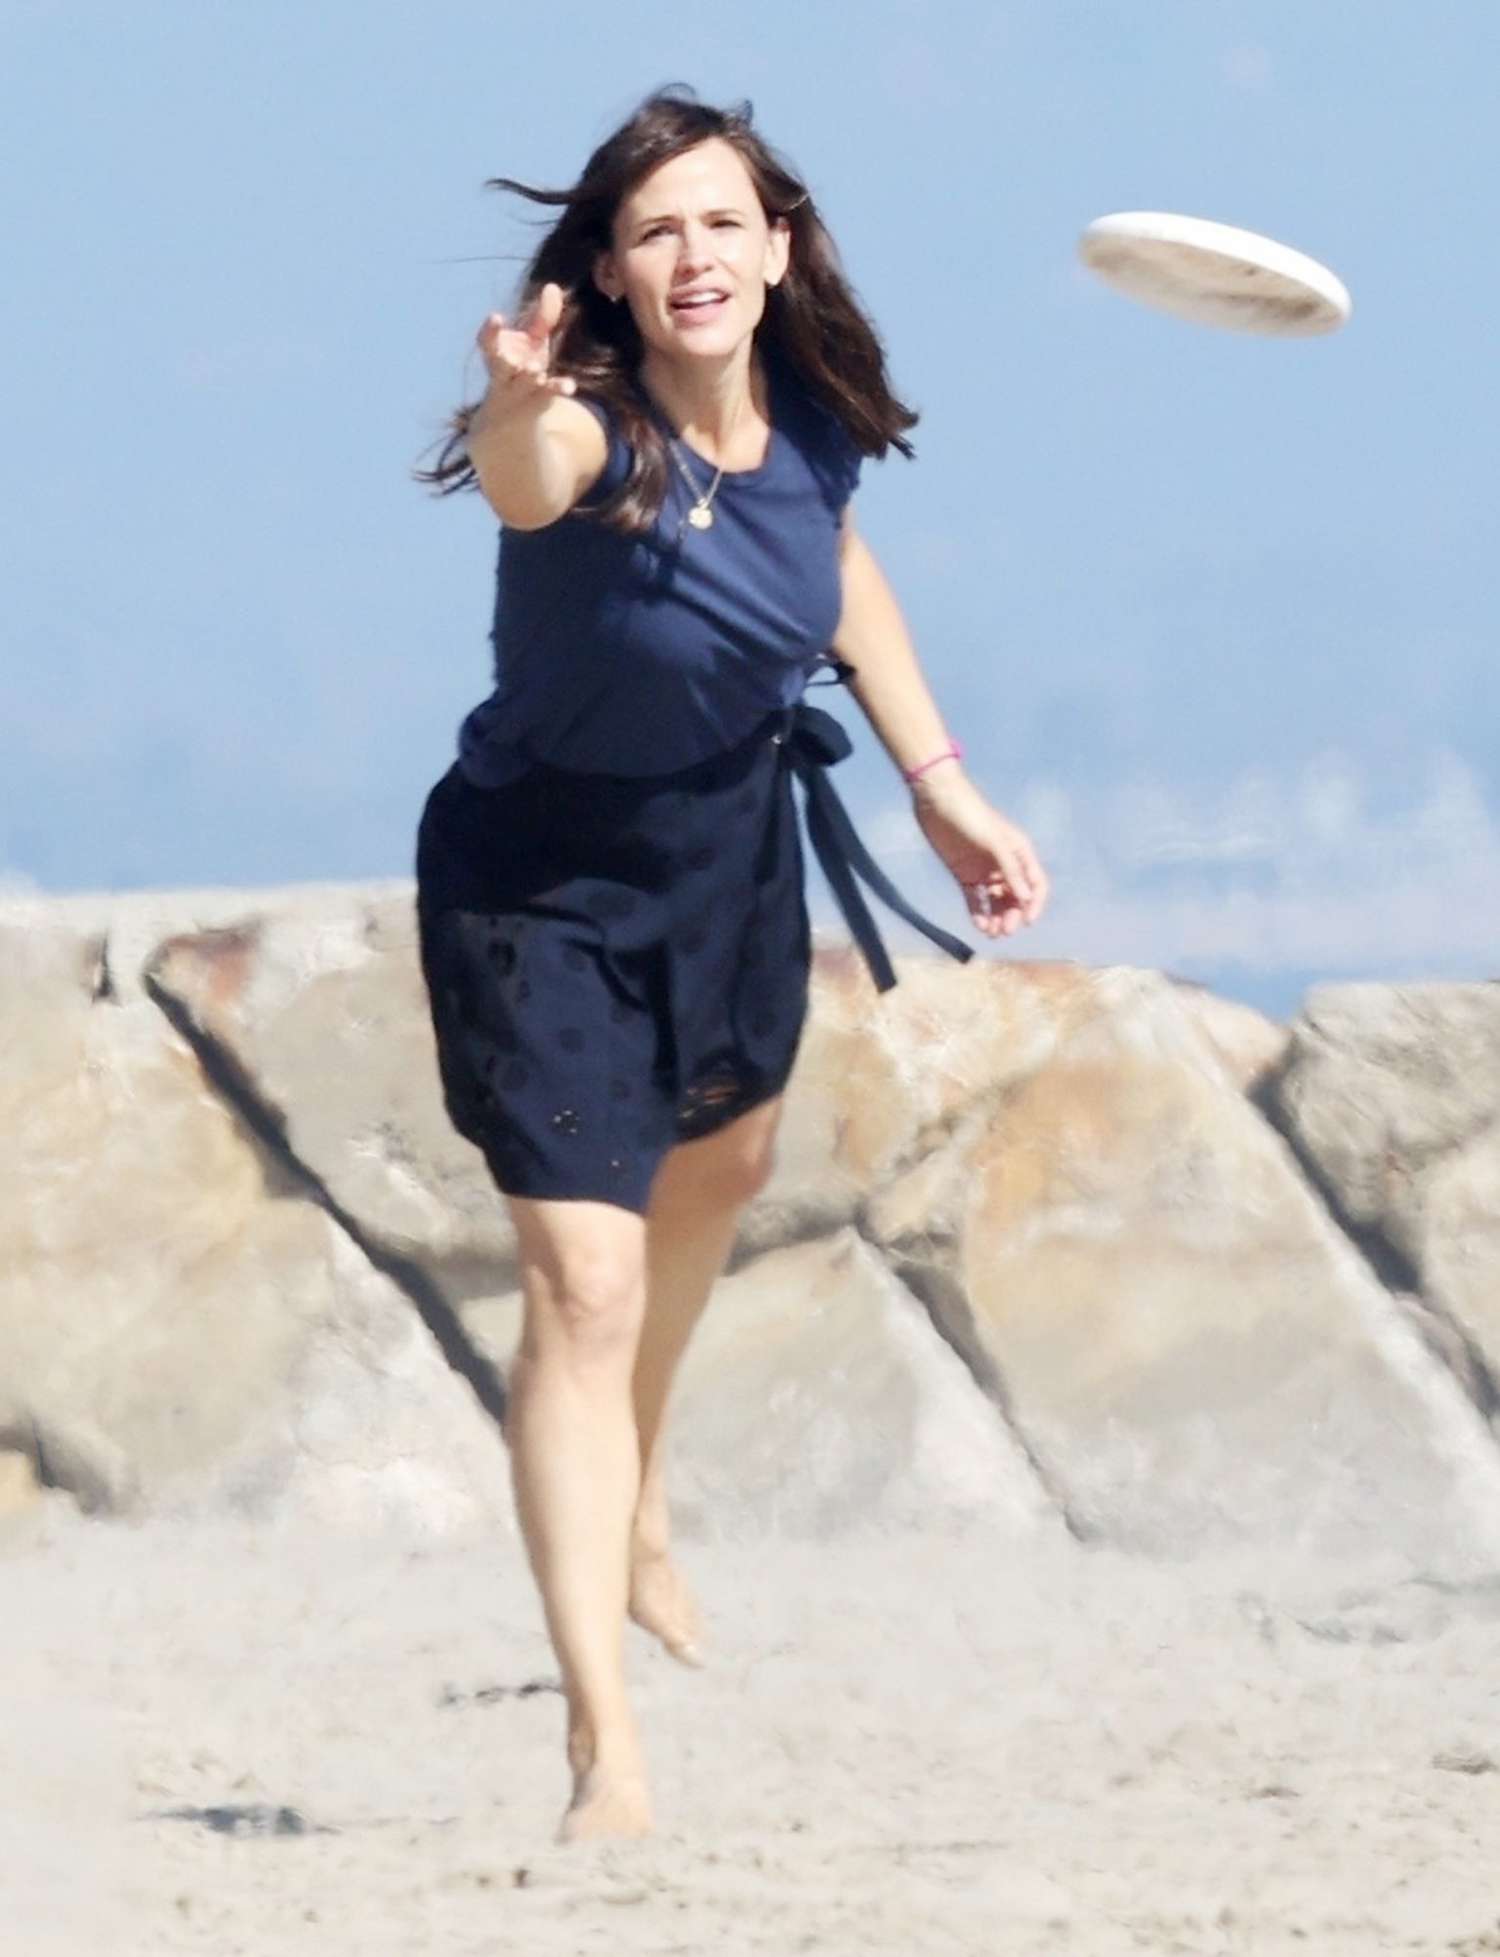 Jennifer Garner plays frisbee on the beach with a friend.